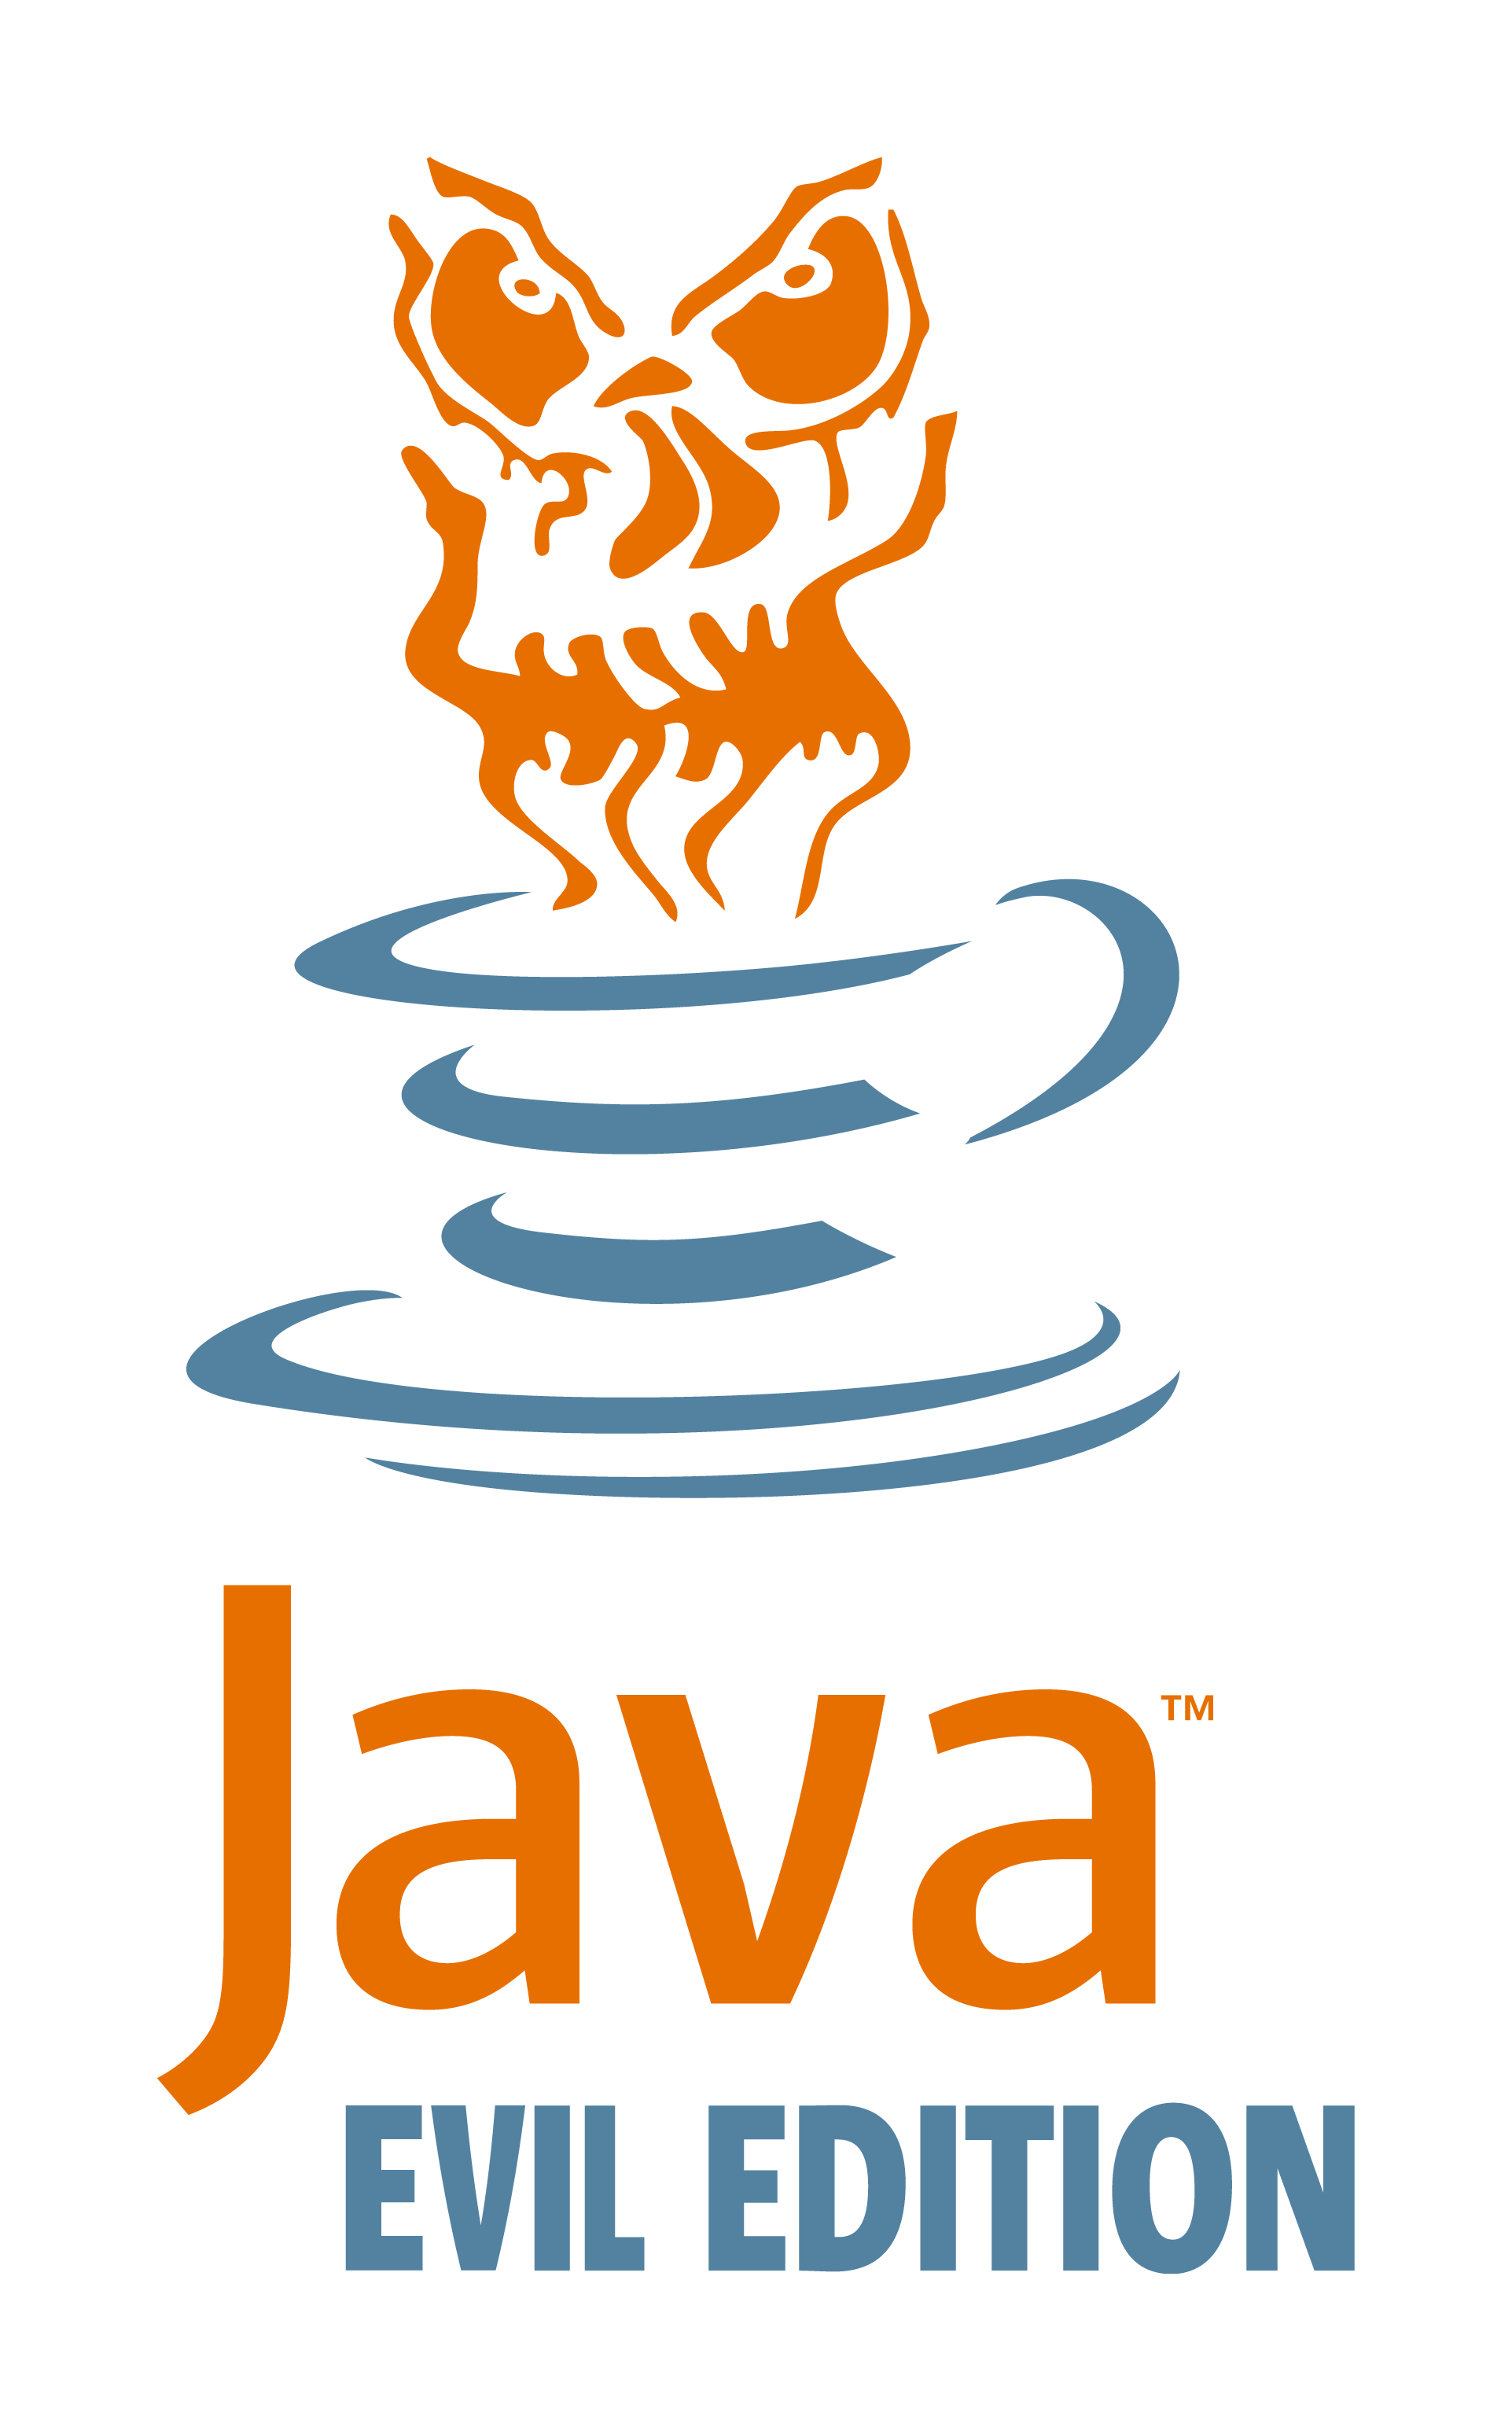 http://420.thrashbarg.net/Java-Evil-Edition-orfjackal_net.png